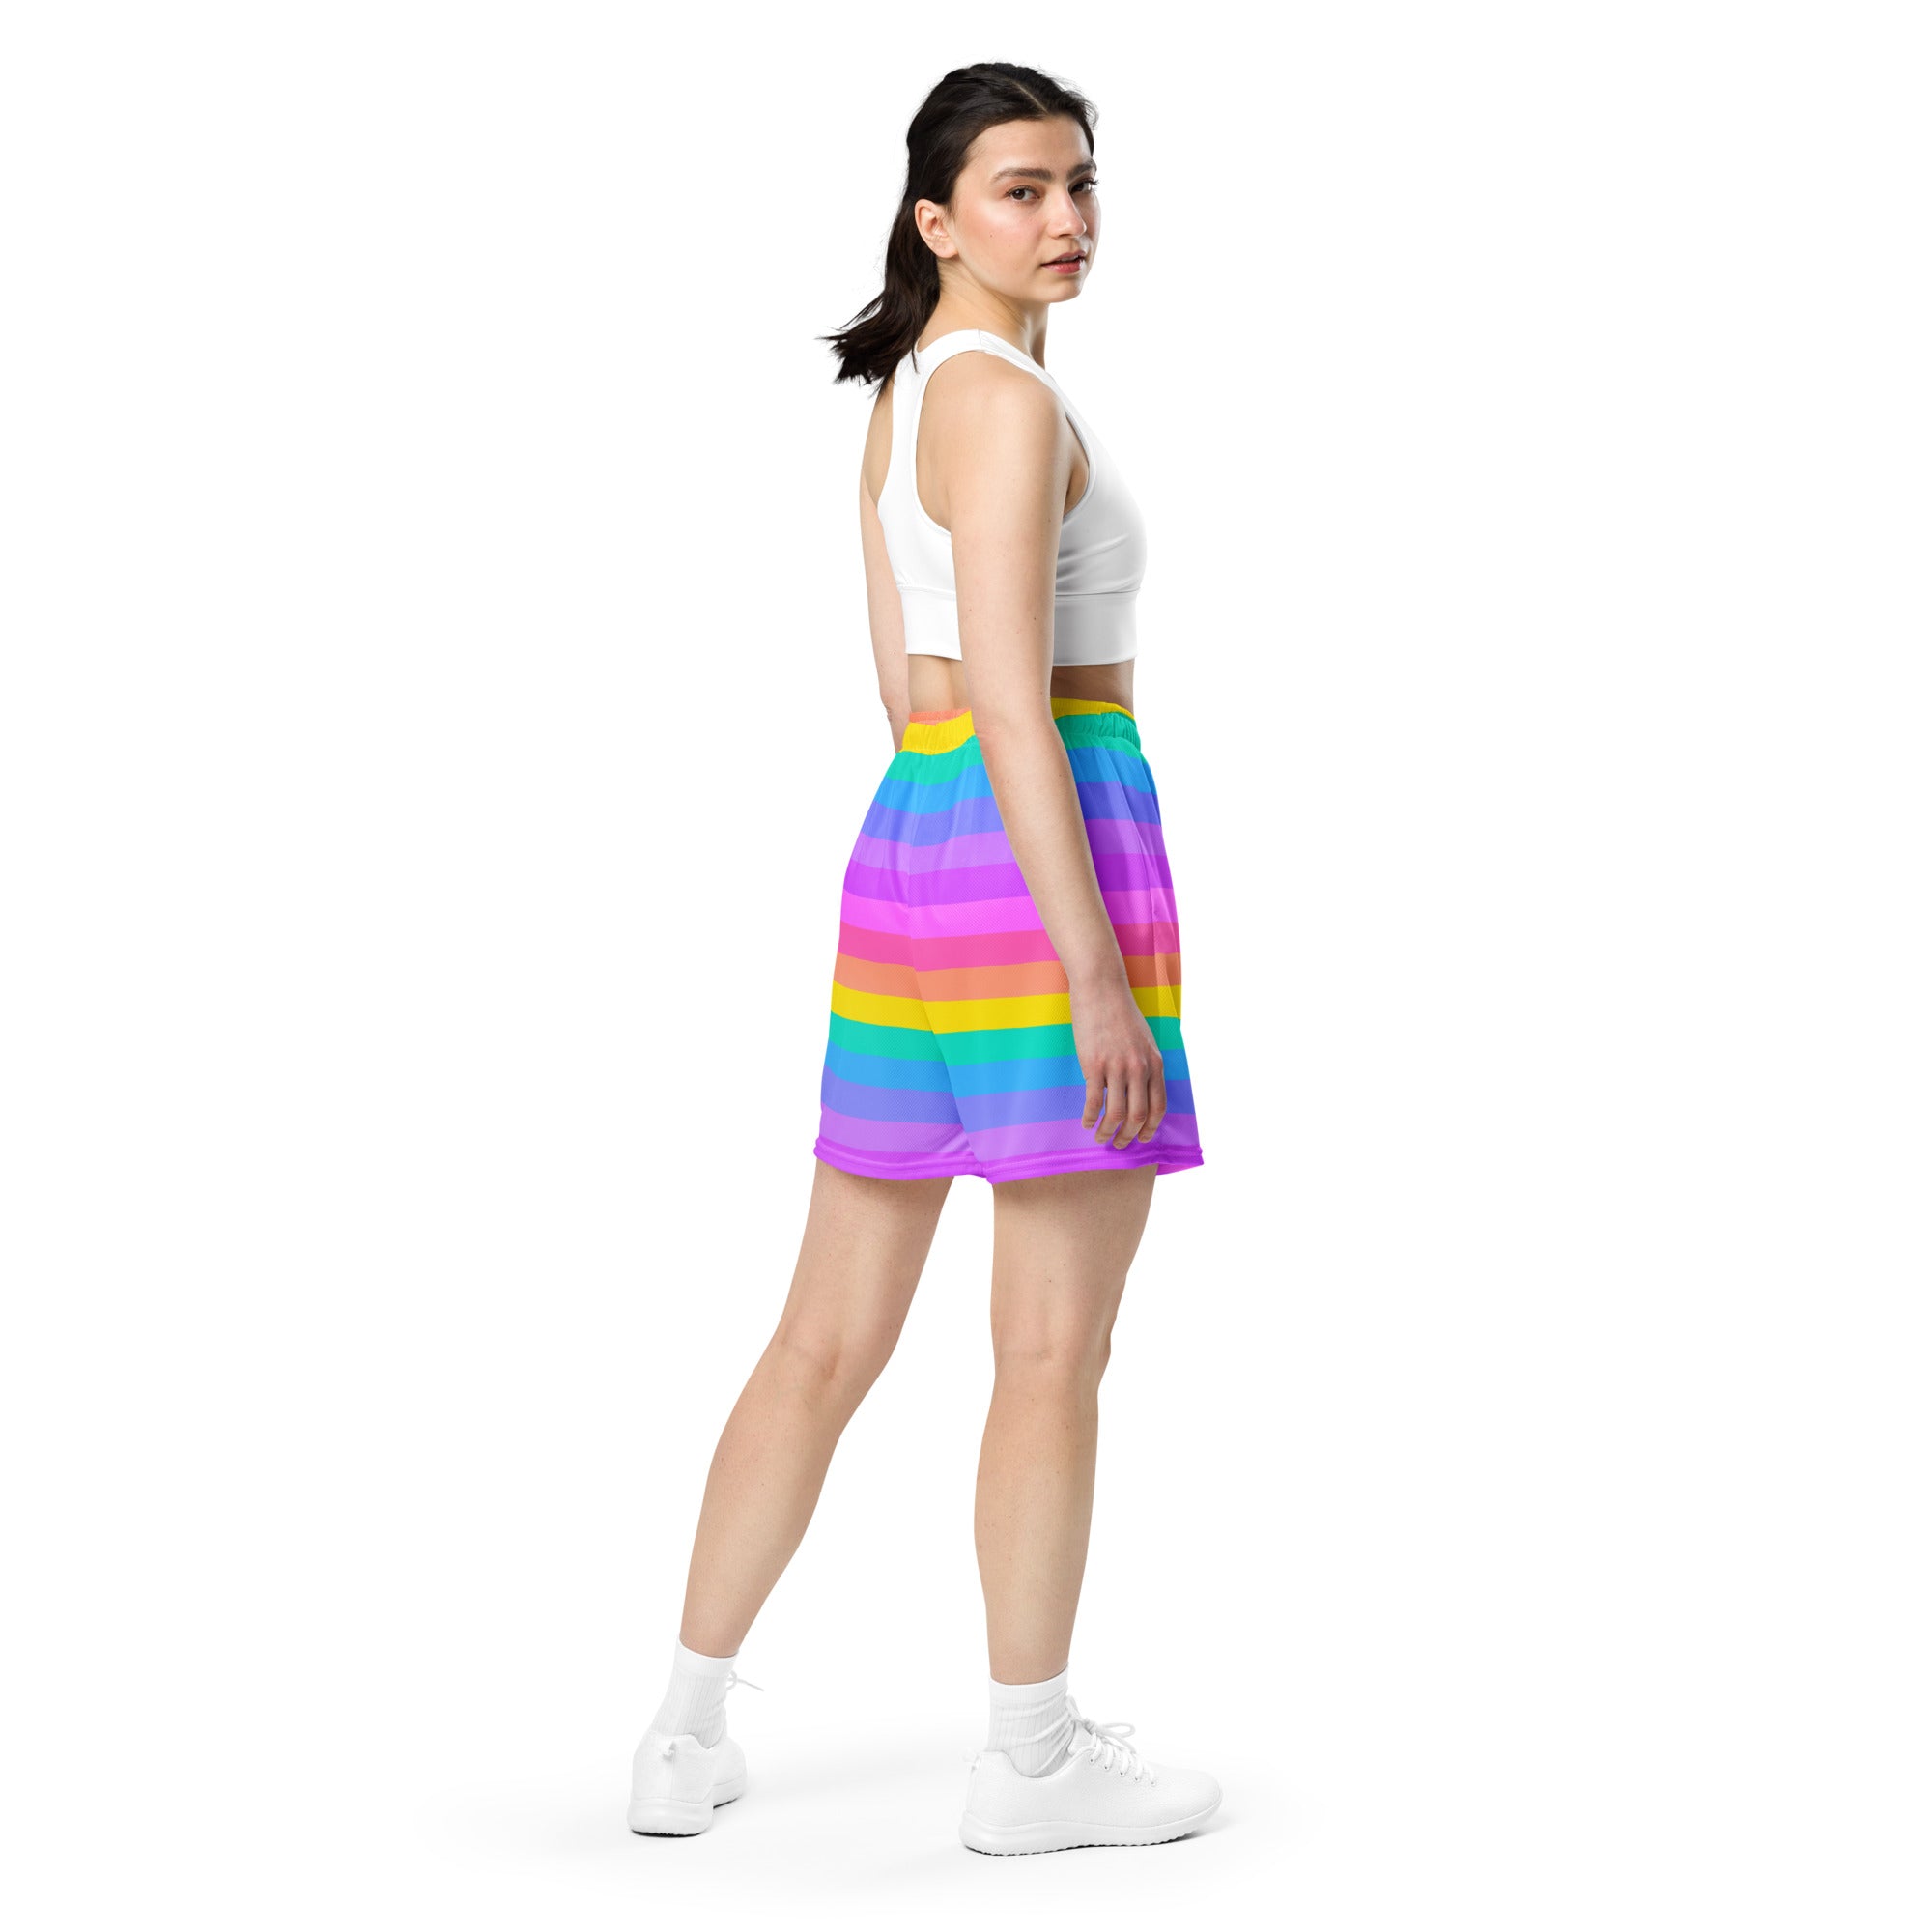 Cloudland Rainbow Mesh Shorts